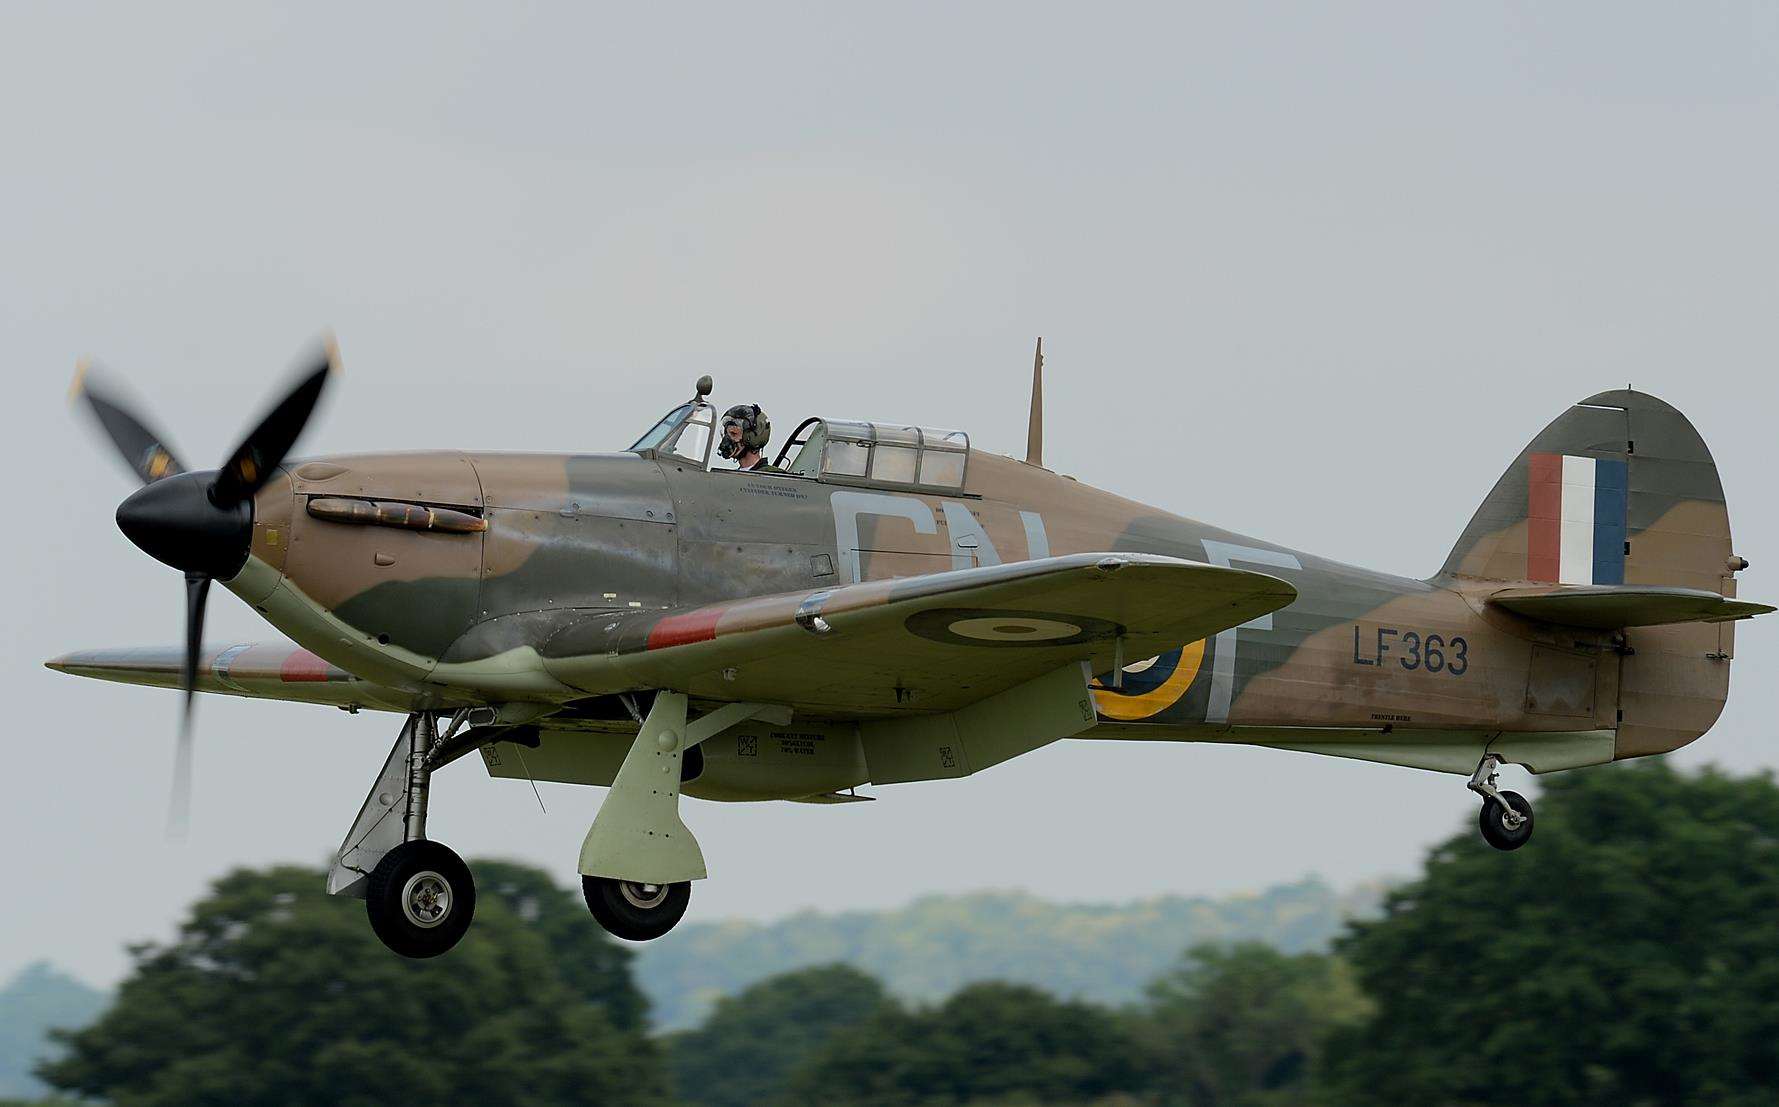 The Battle of Britain Air Show